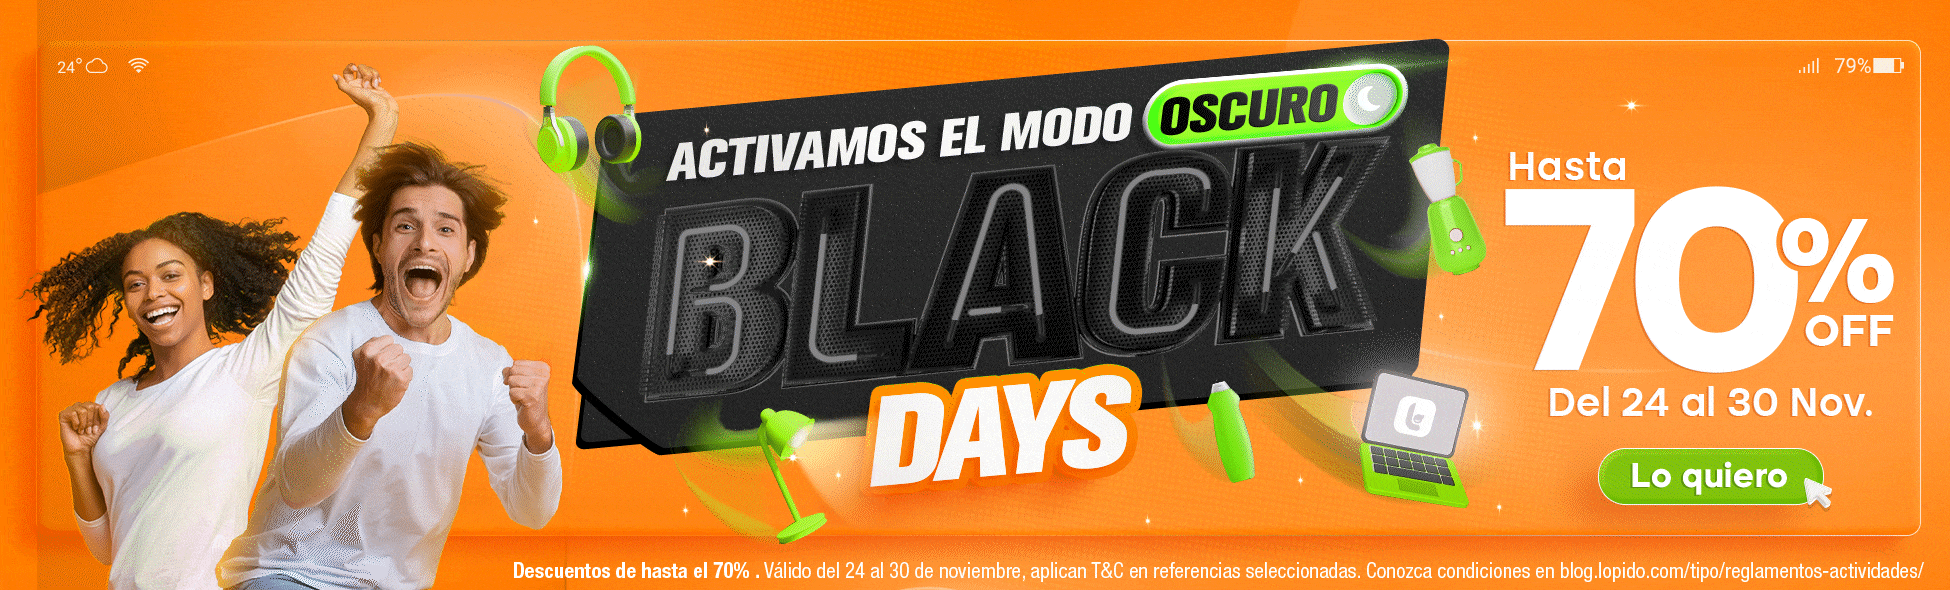 black days ofertas viernes negro